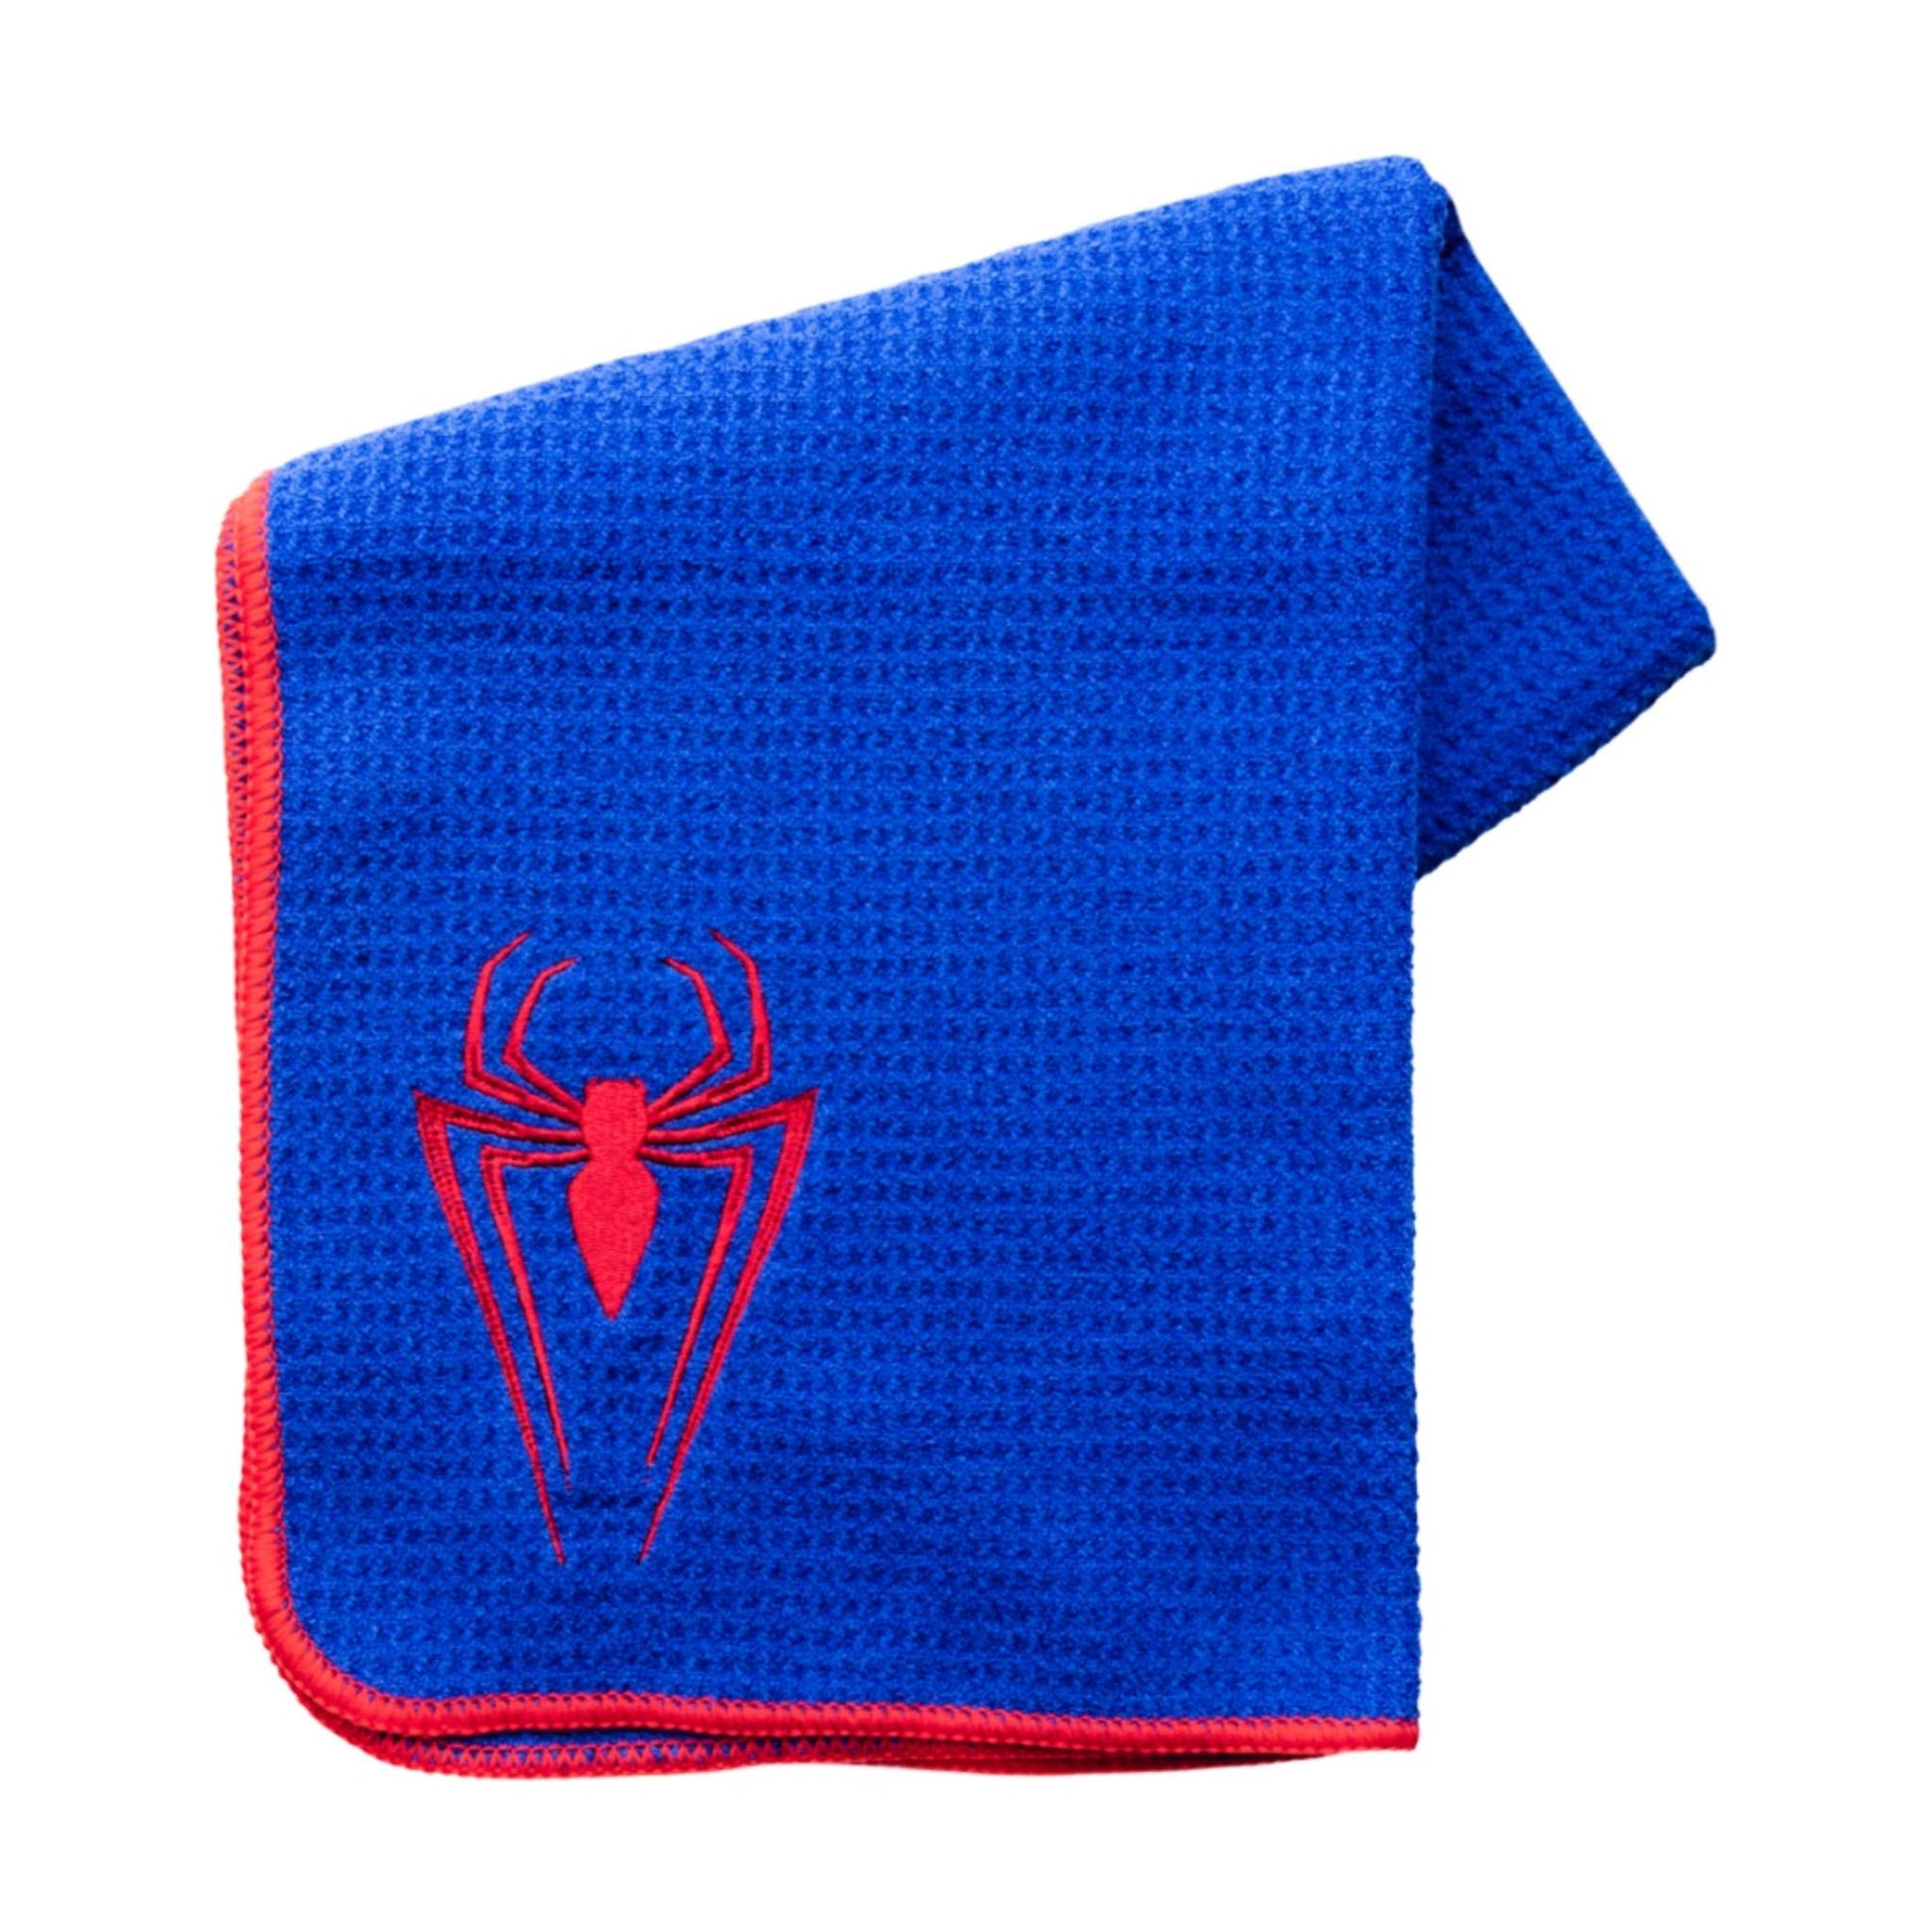 Performa - Performance Towel, Spiderman, Team Perfect